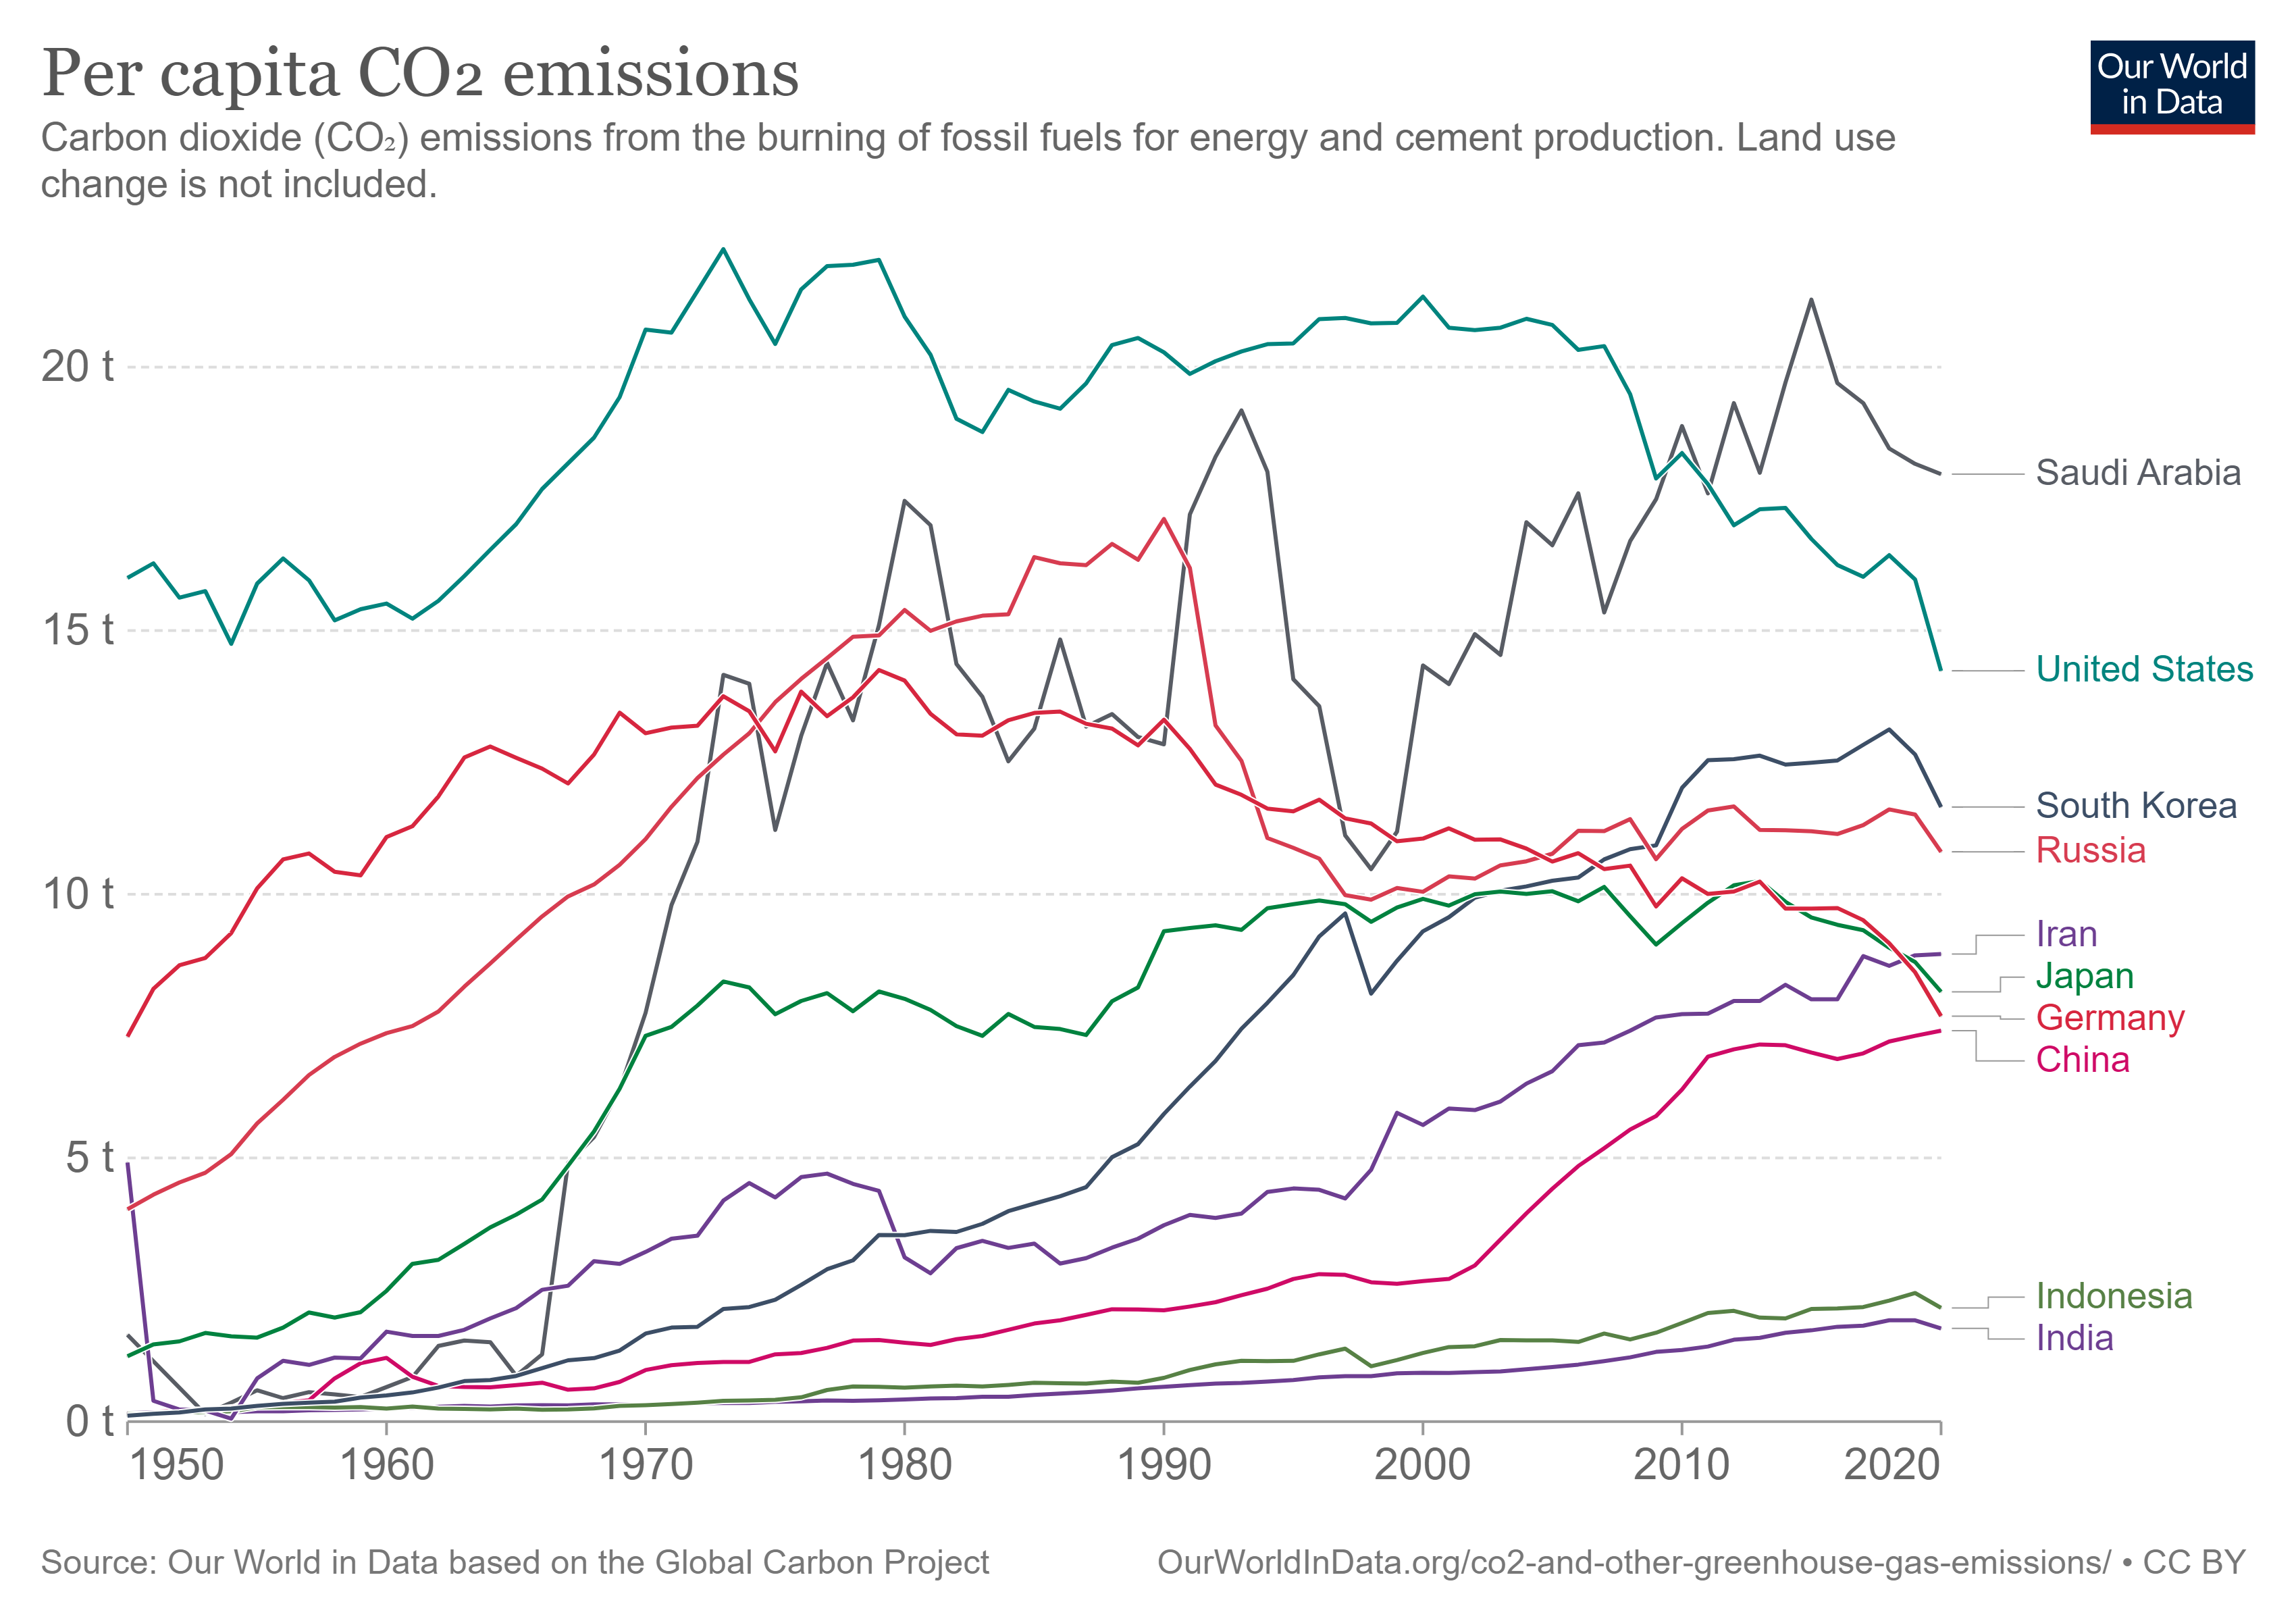 CO2 emissions per capita